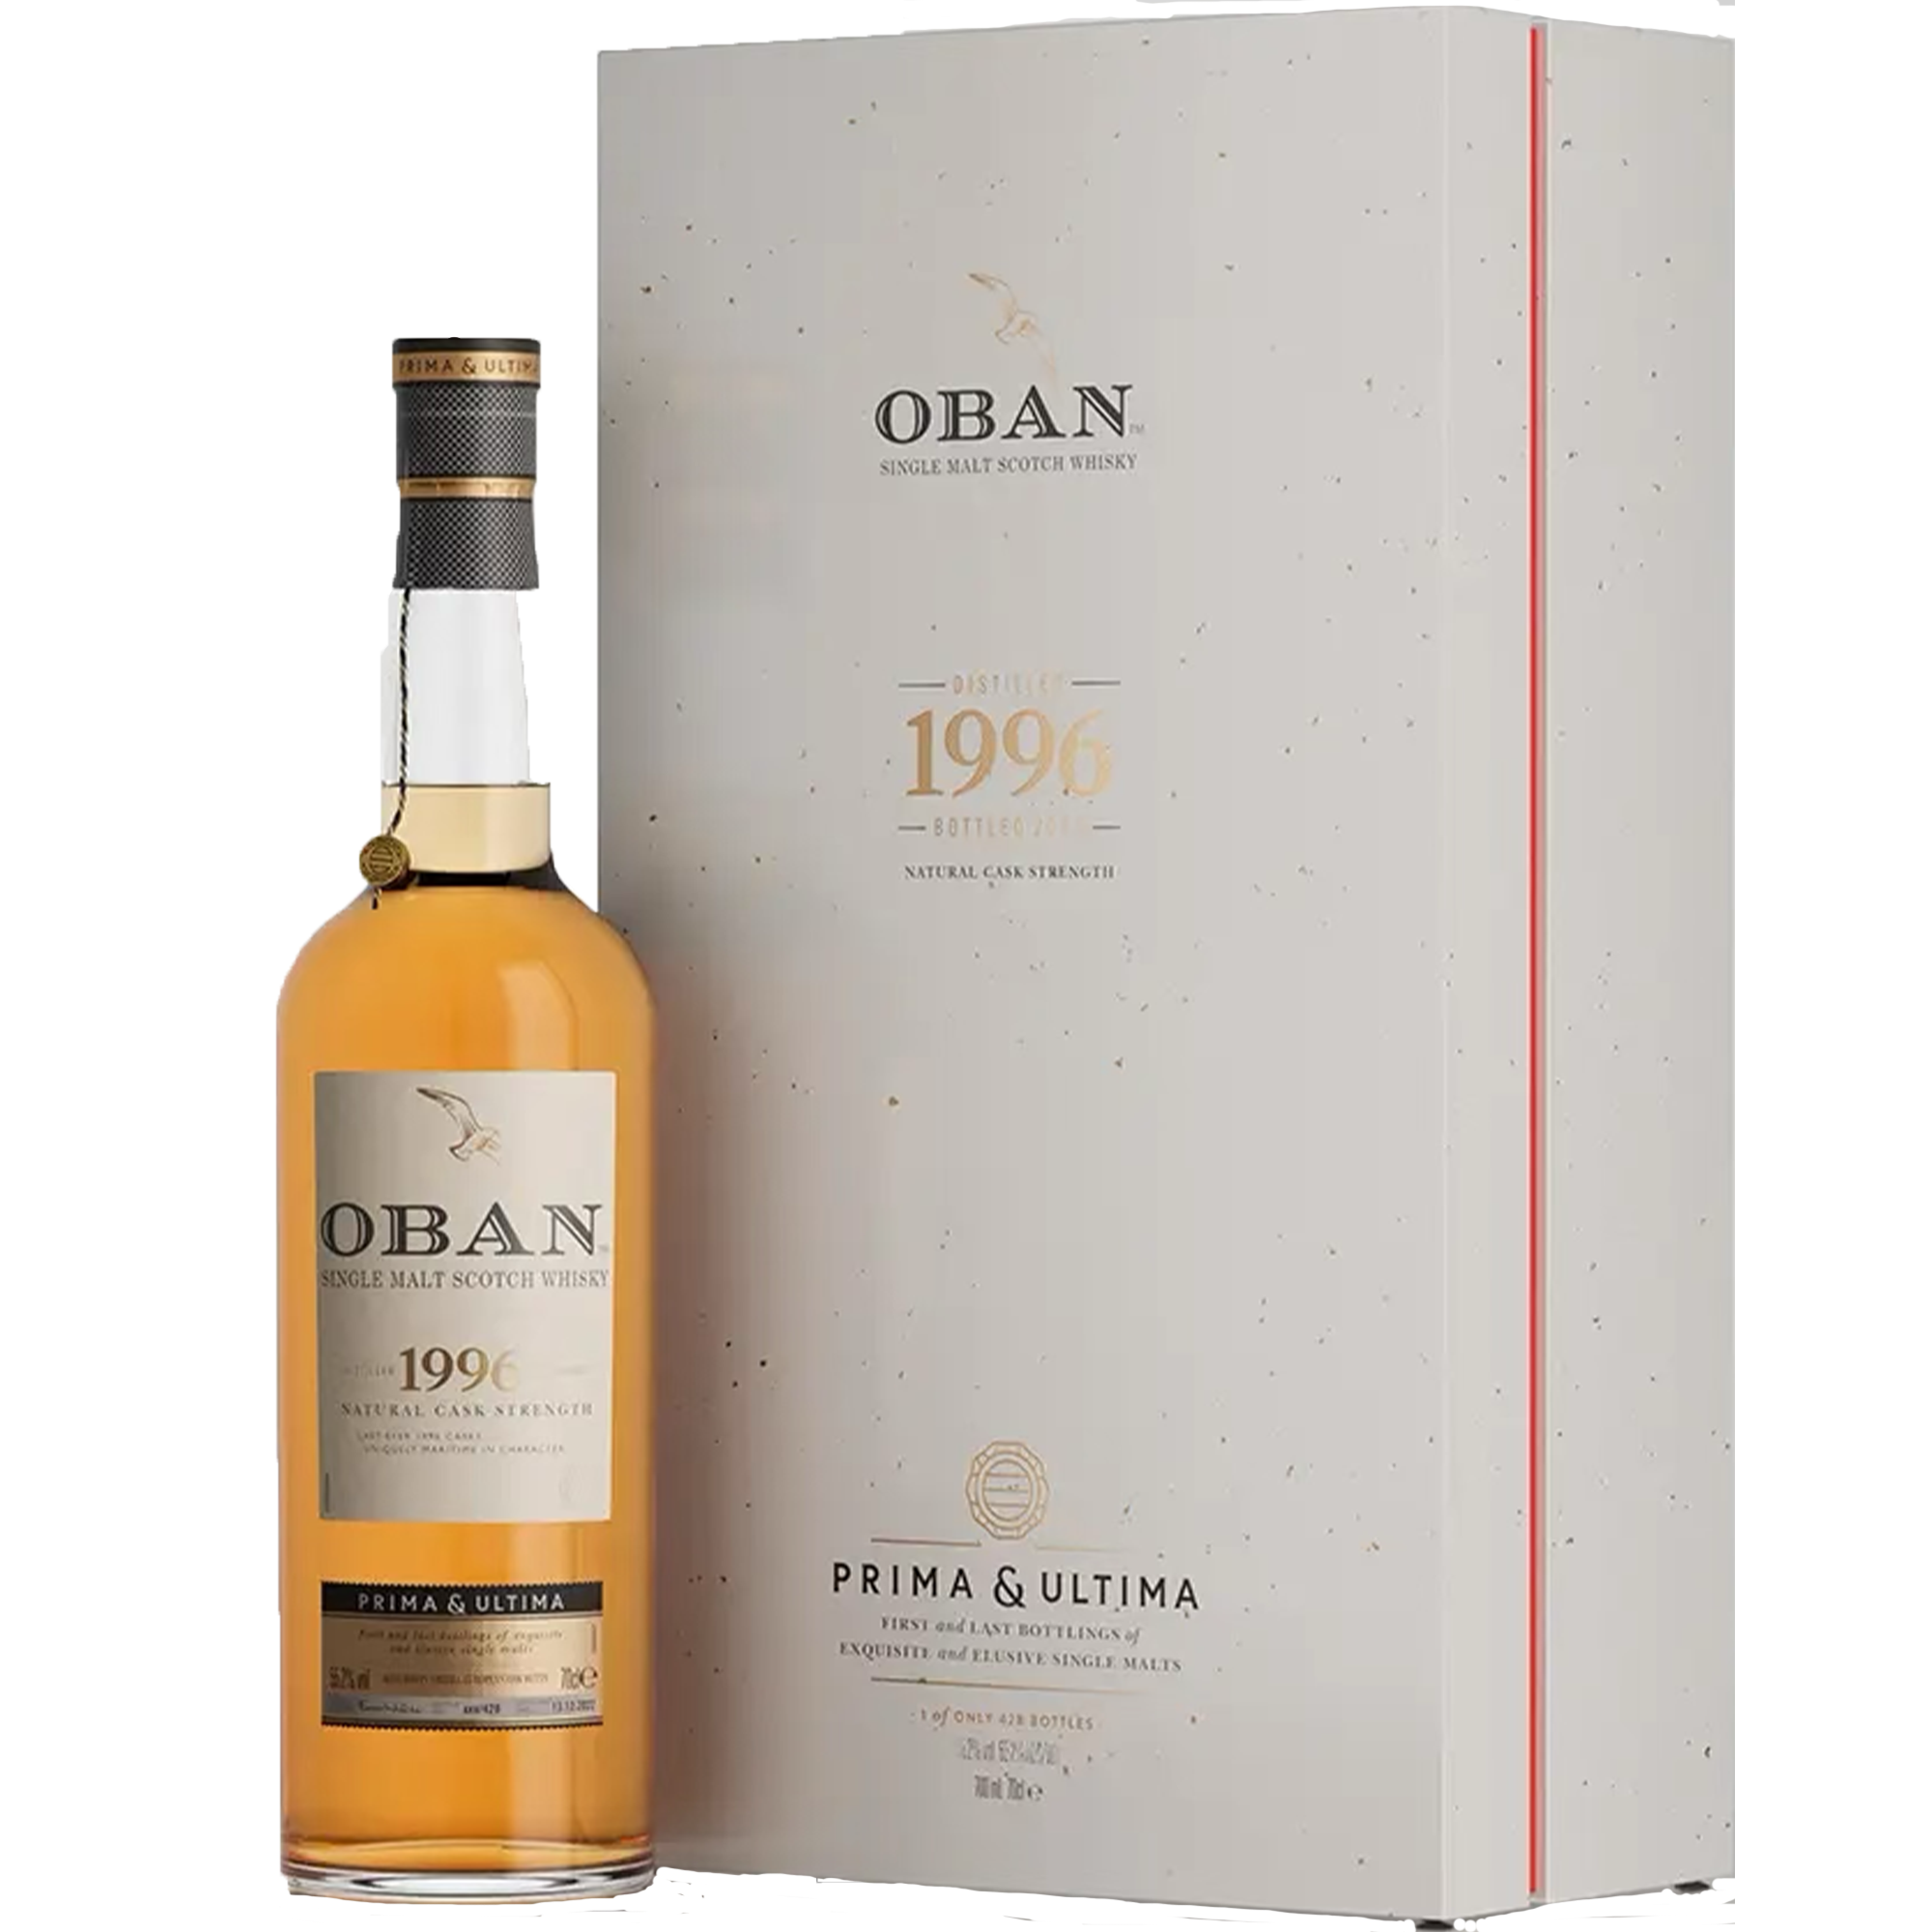 Oban 1996 Prima & Ultima 26 Year Single Malt Scotch